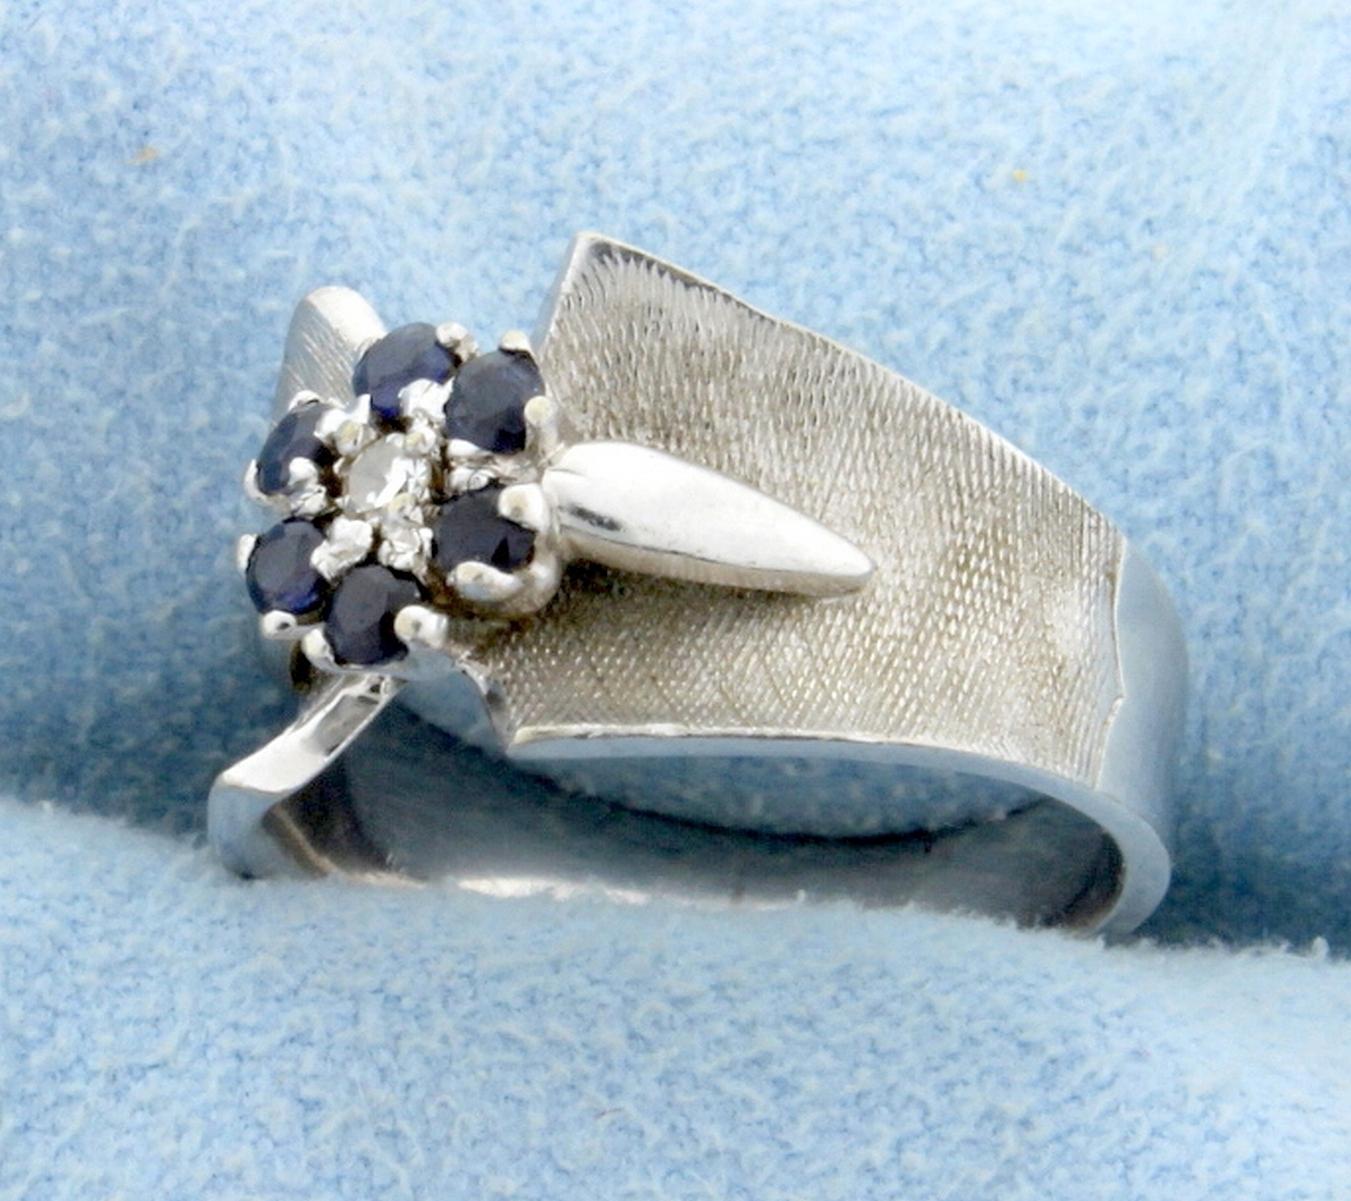 Diamond & Sapphire Ring In 14k White Gold